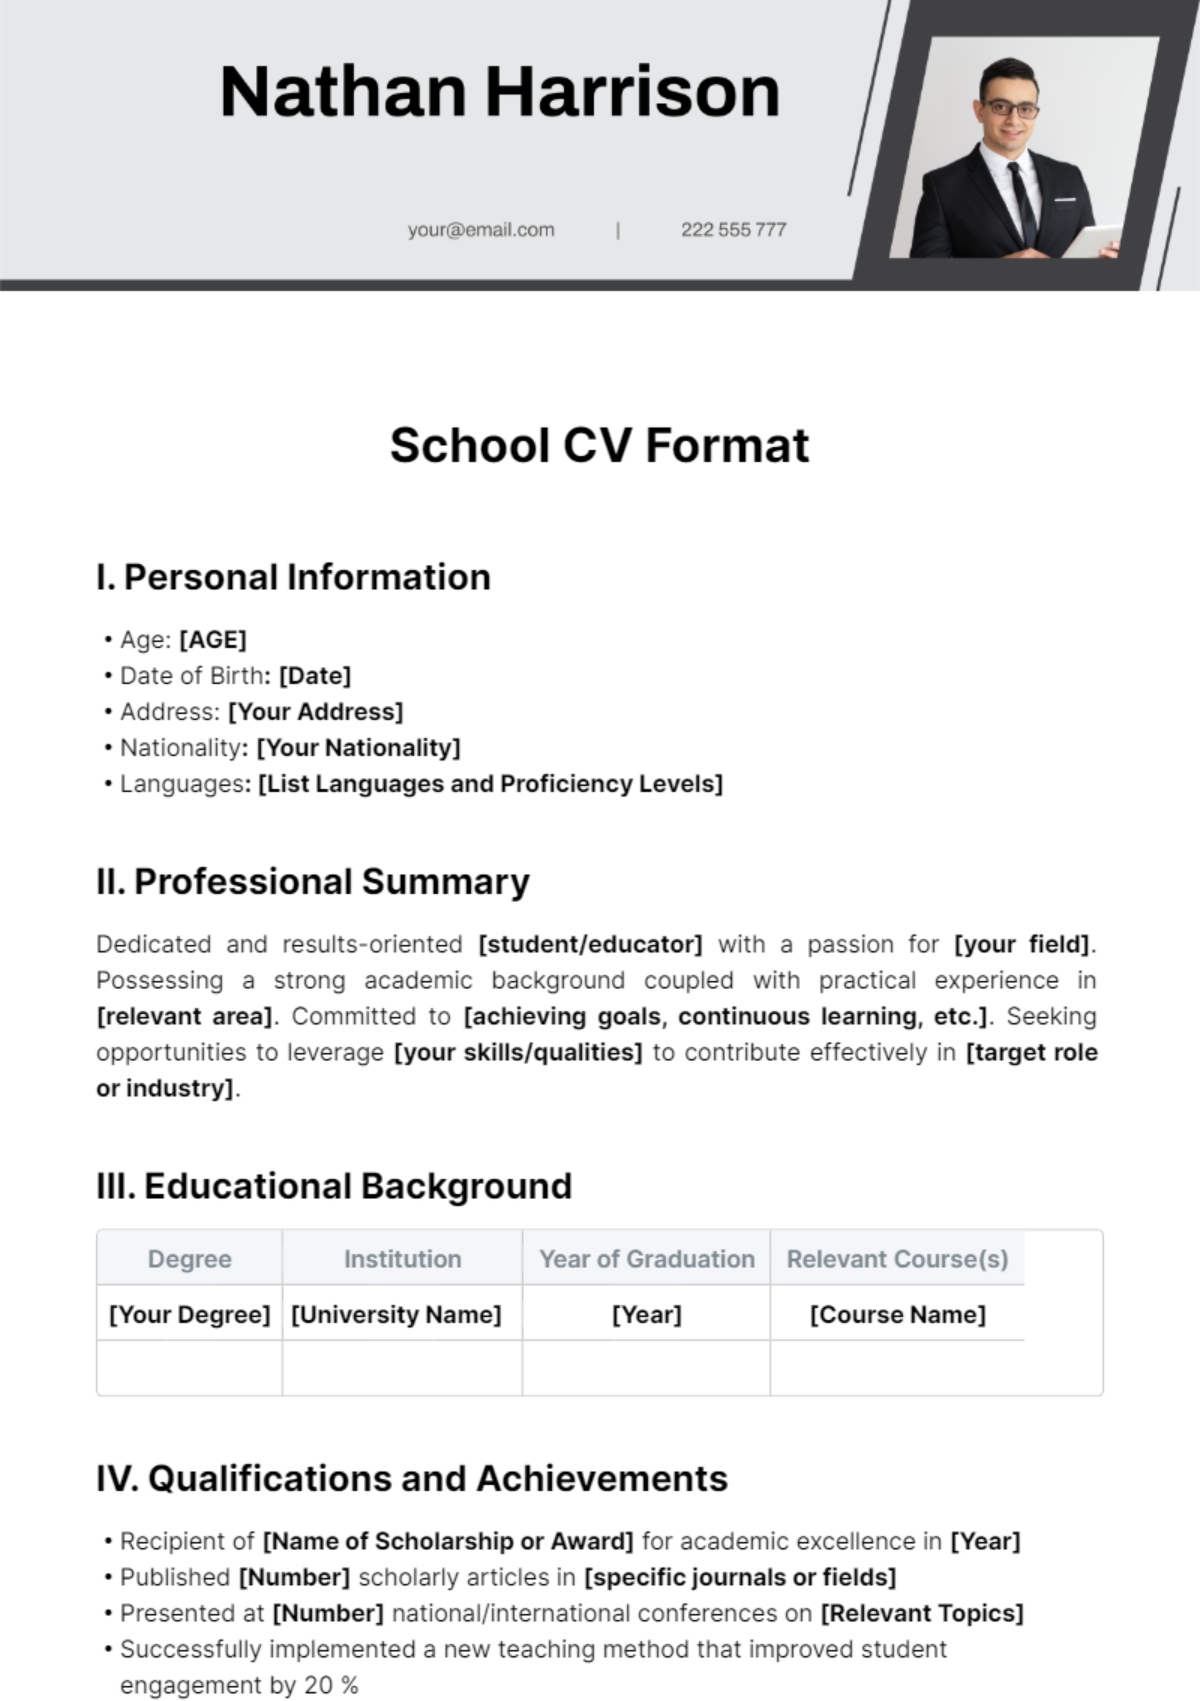 School CV Format Template